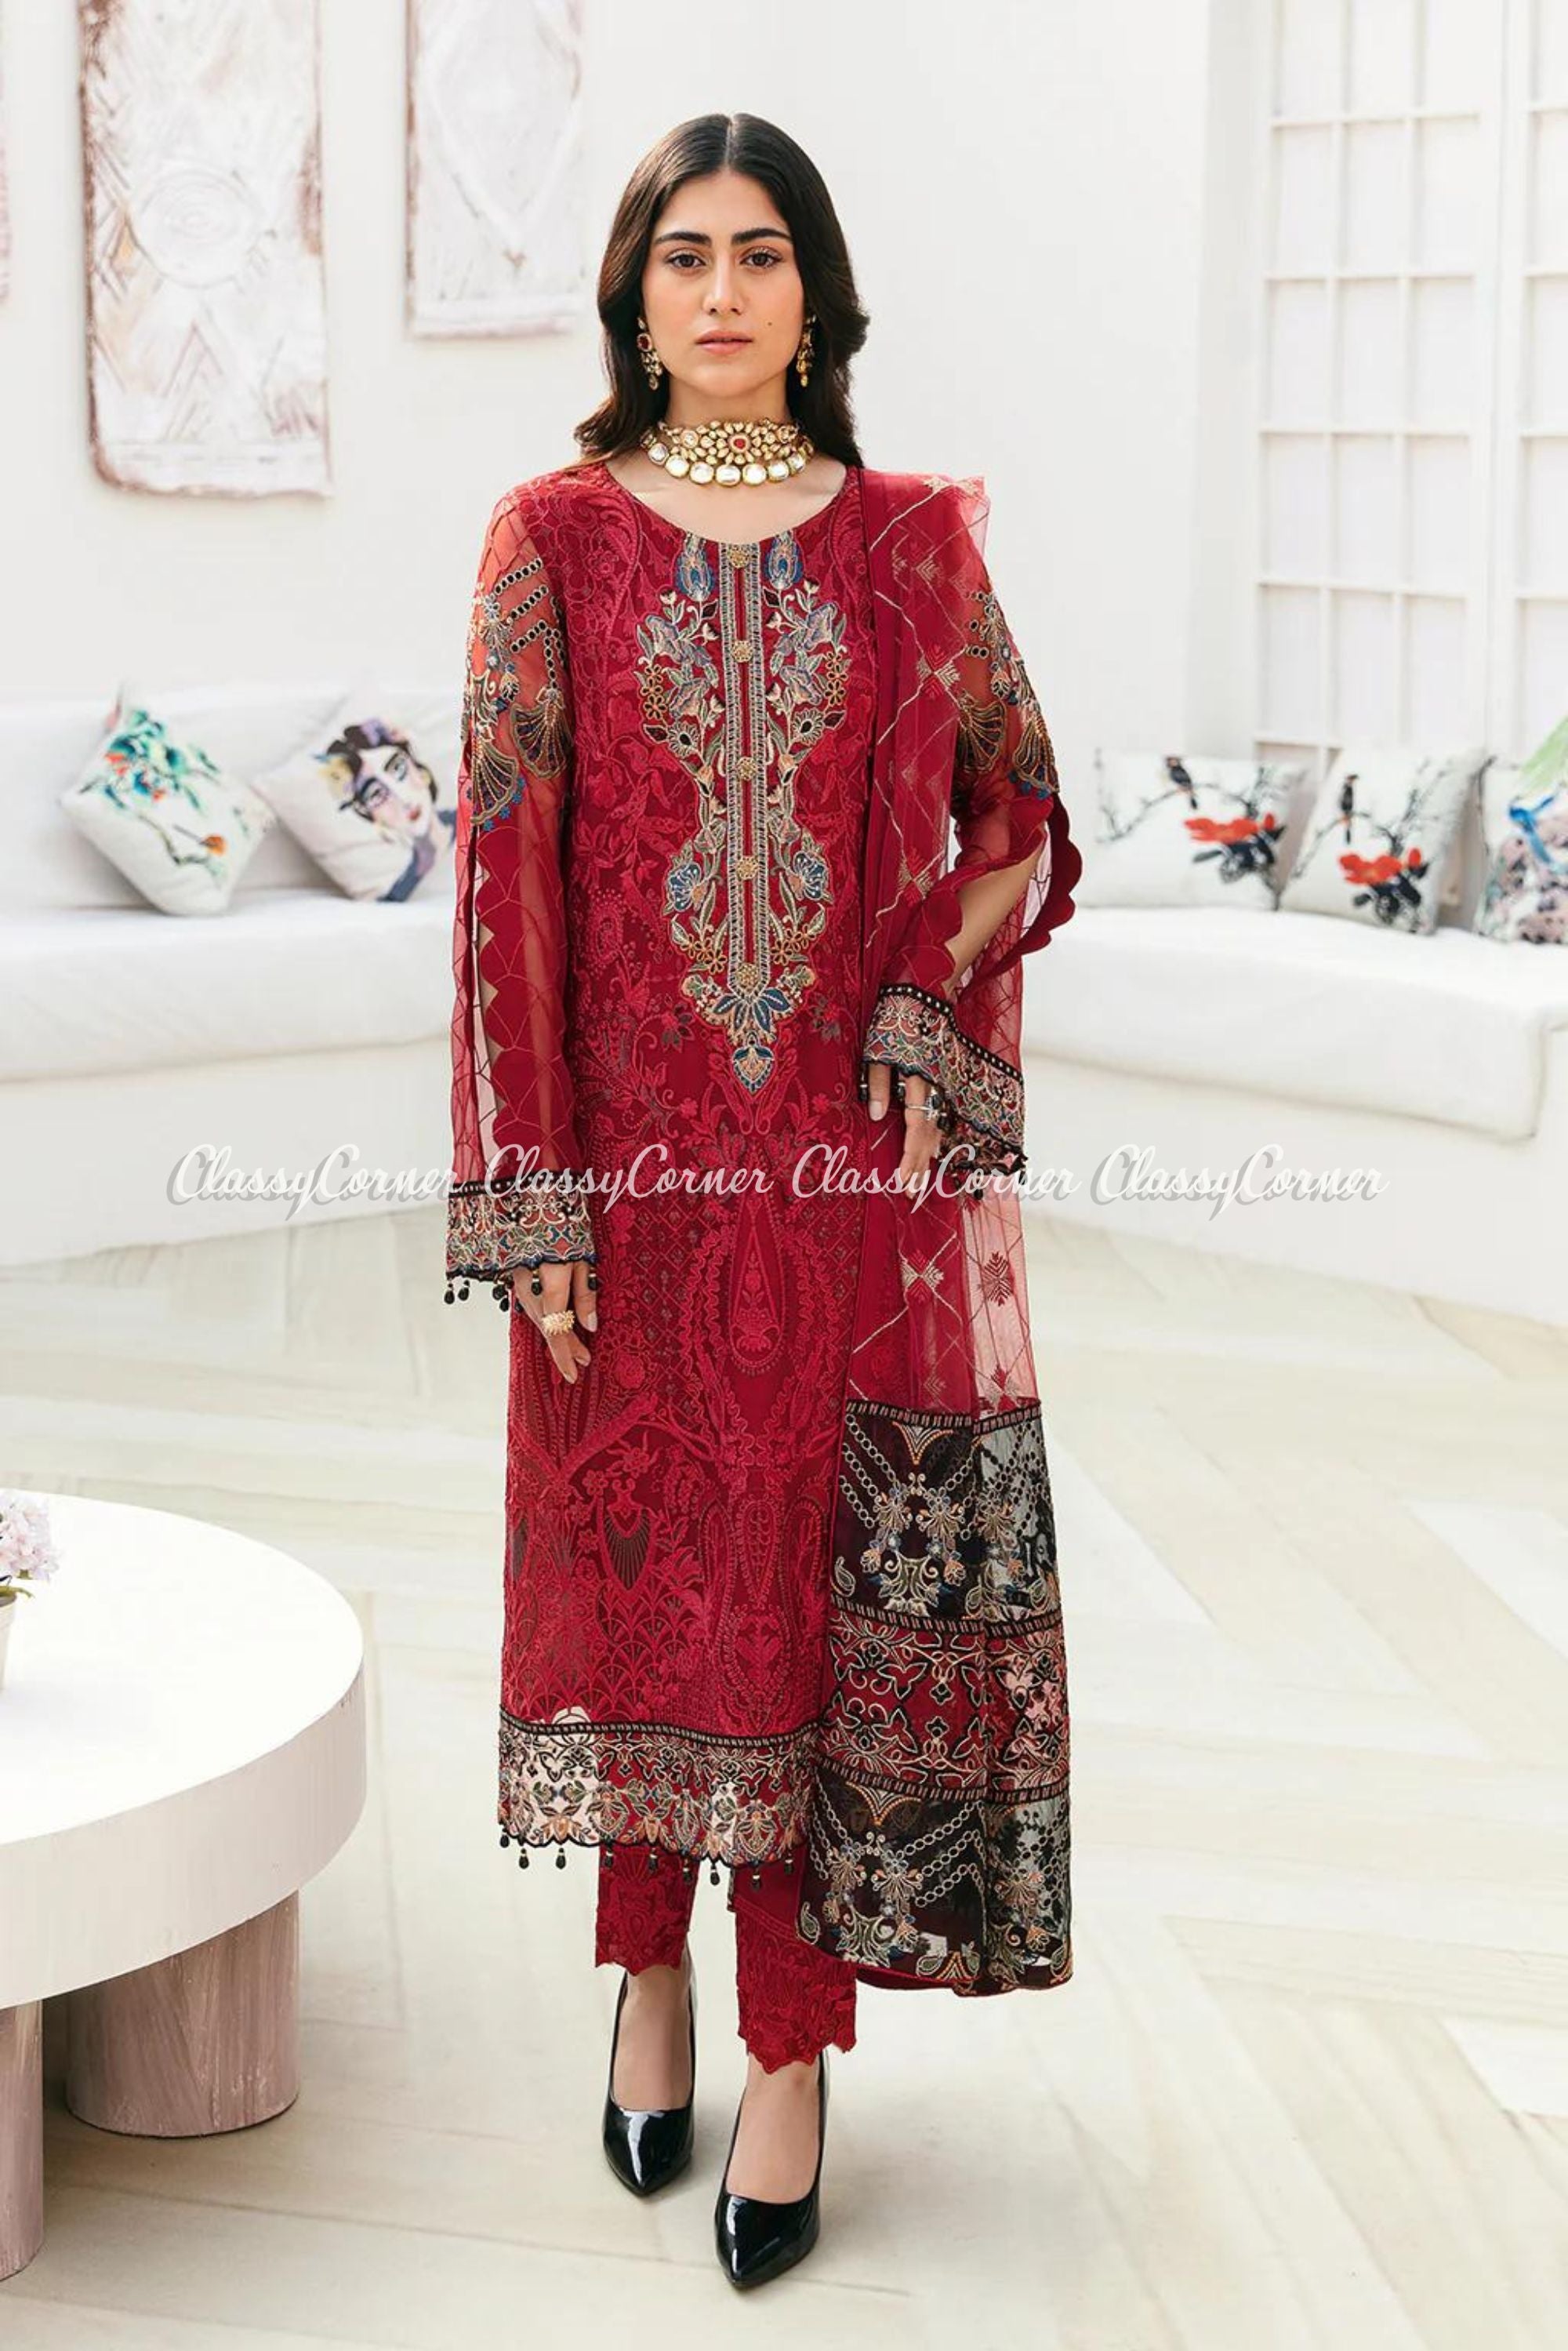 Pakistani Formal dresses online in Sydney